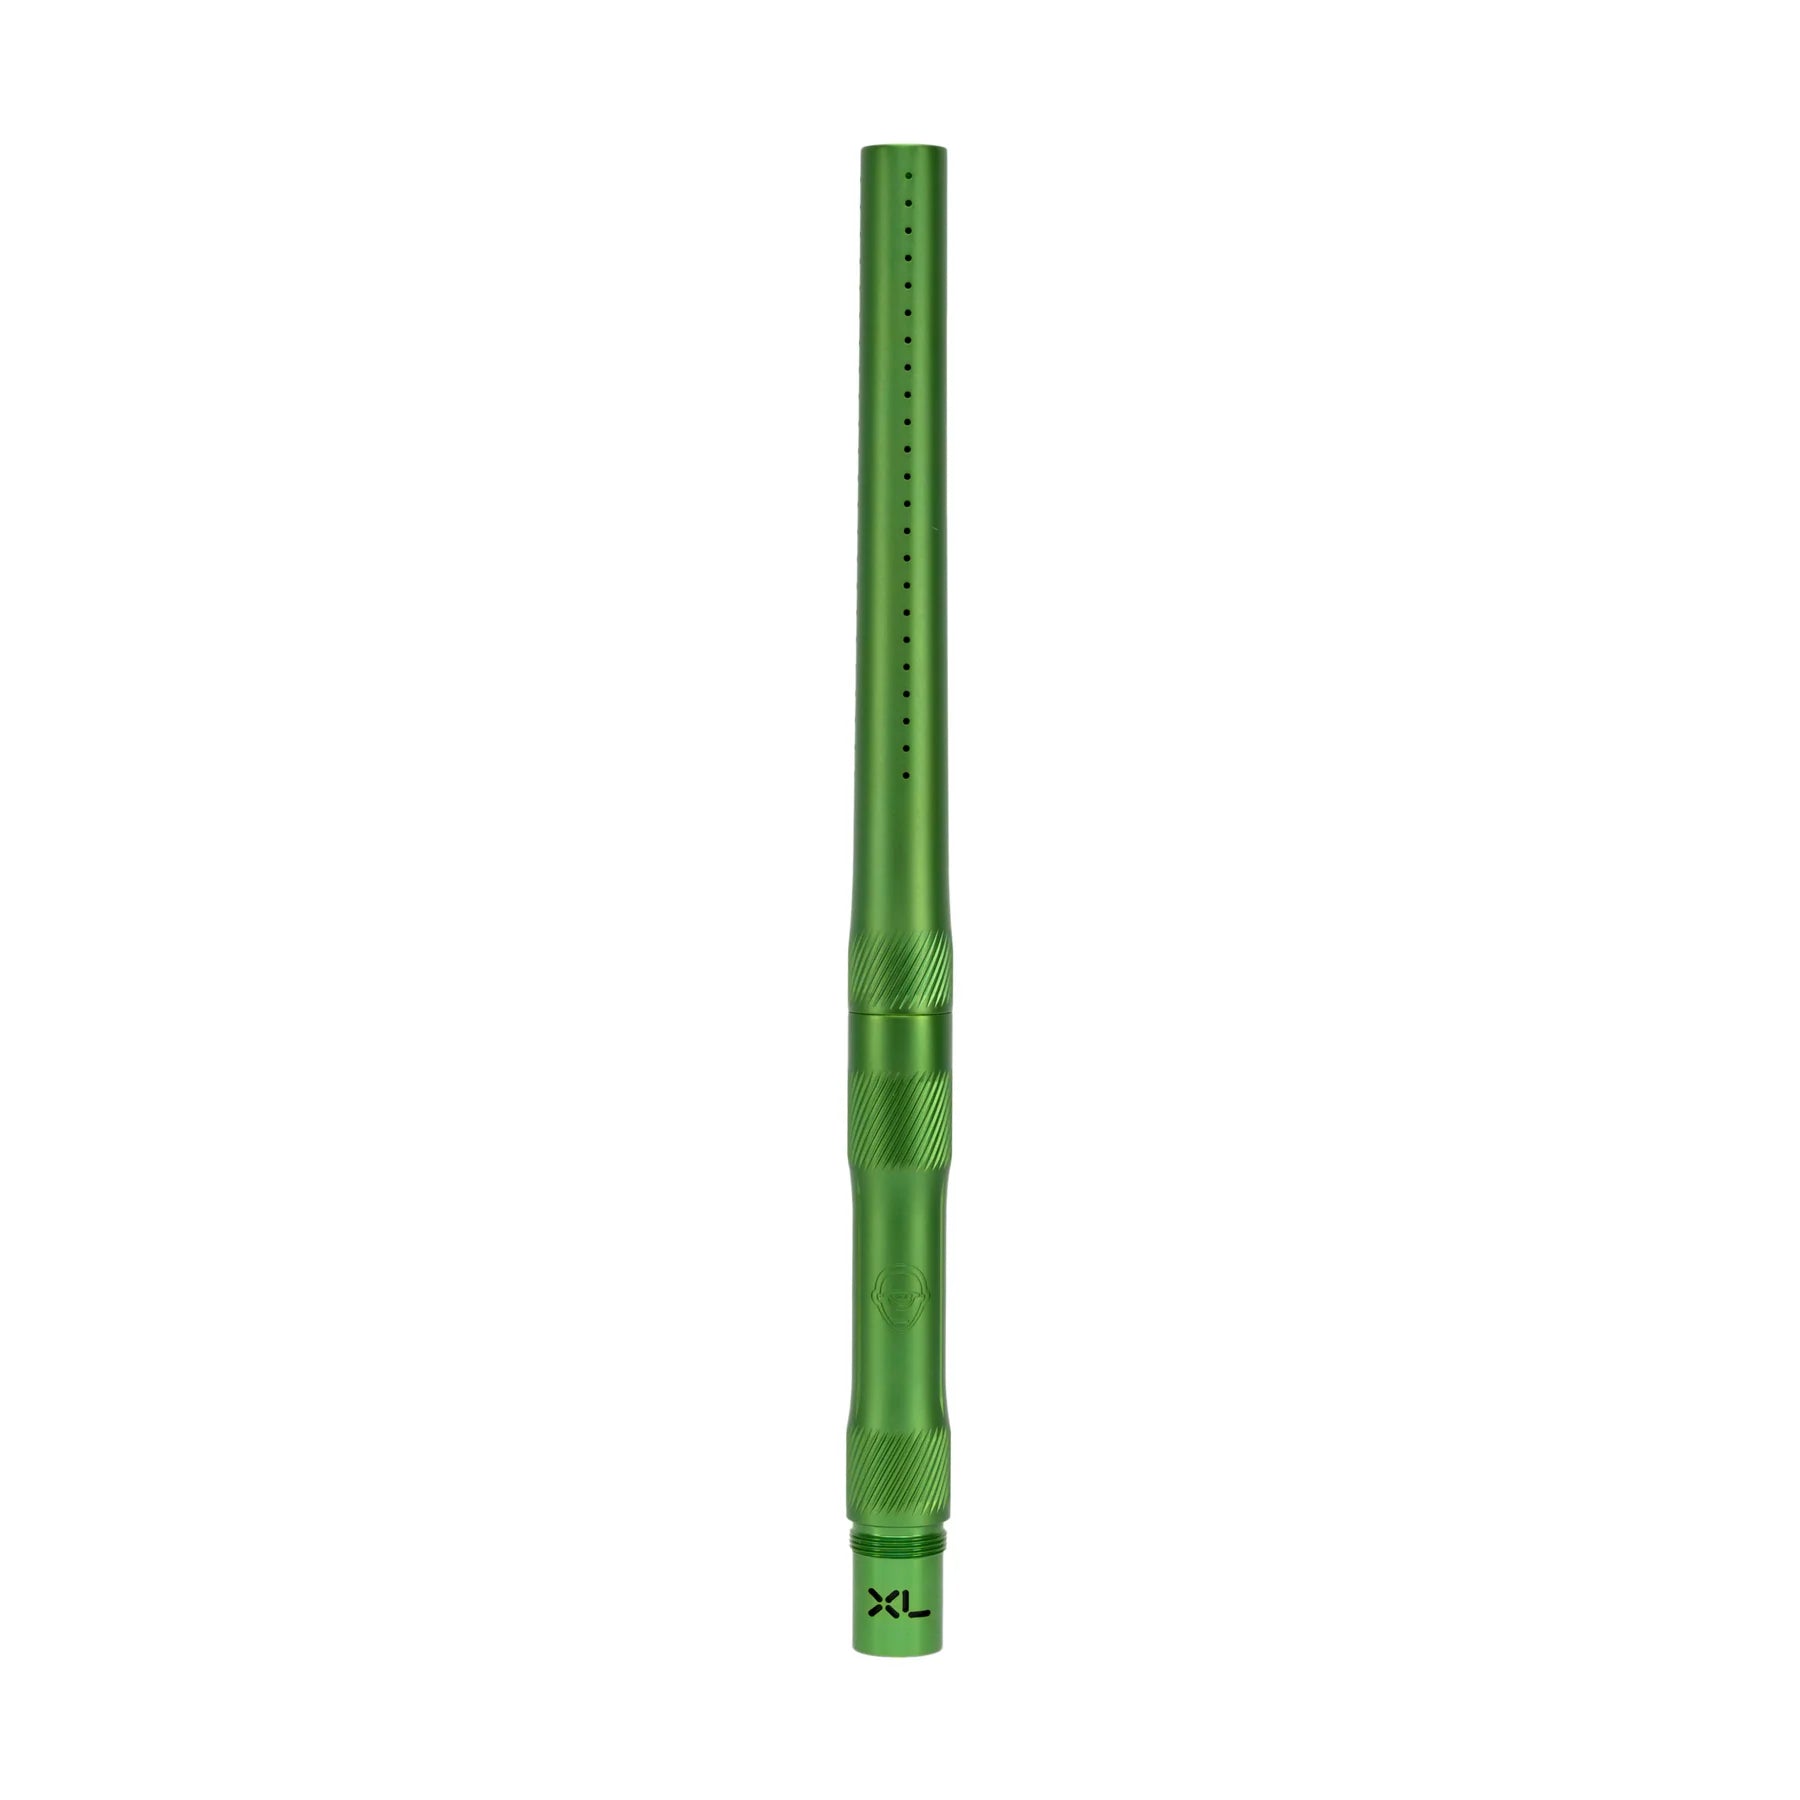 FREAK XL - Green Anodized - Full Barrel Kit - Autococker Thread - Aluminum Insert